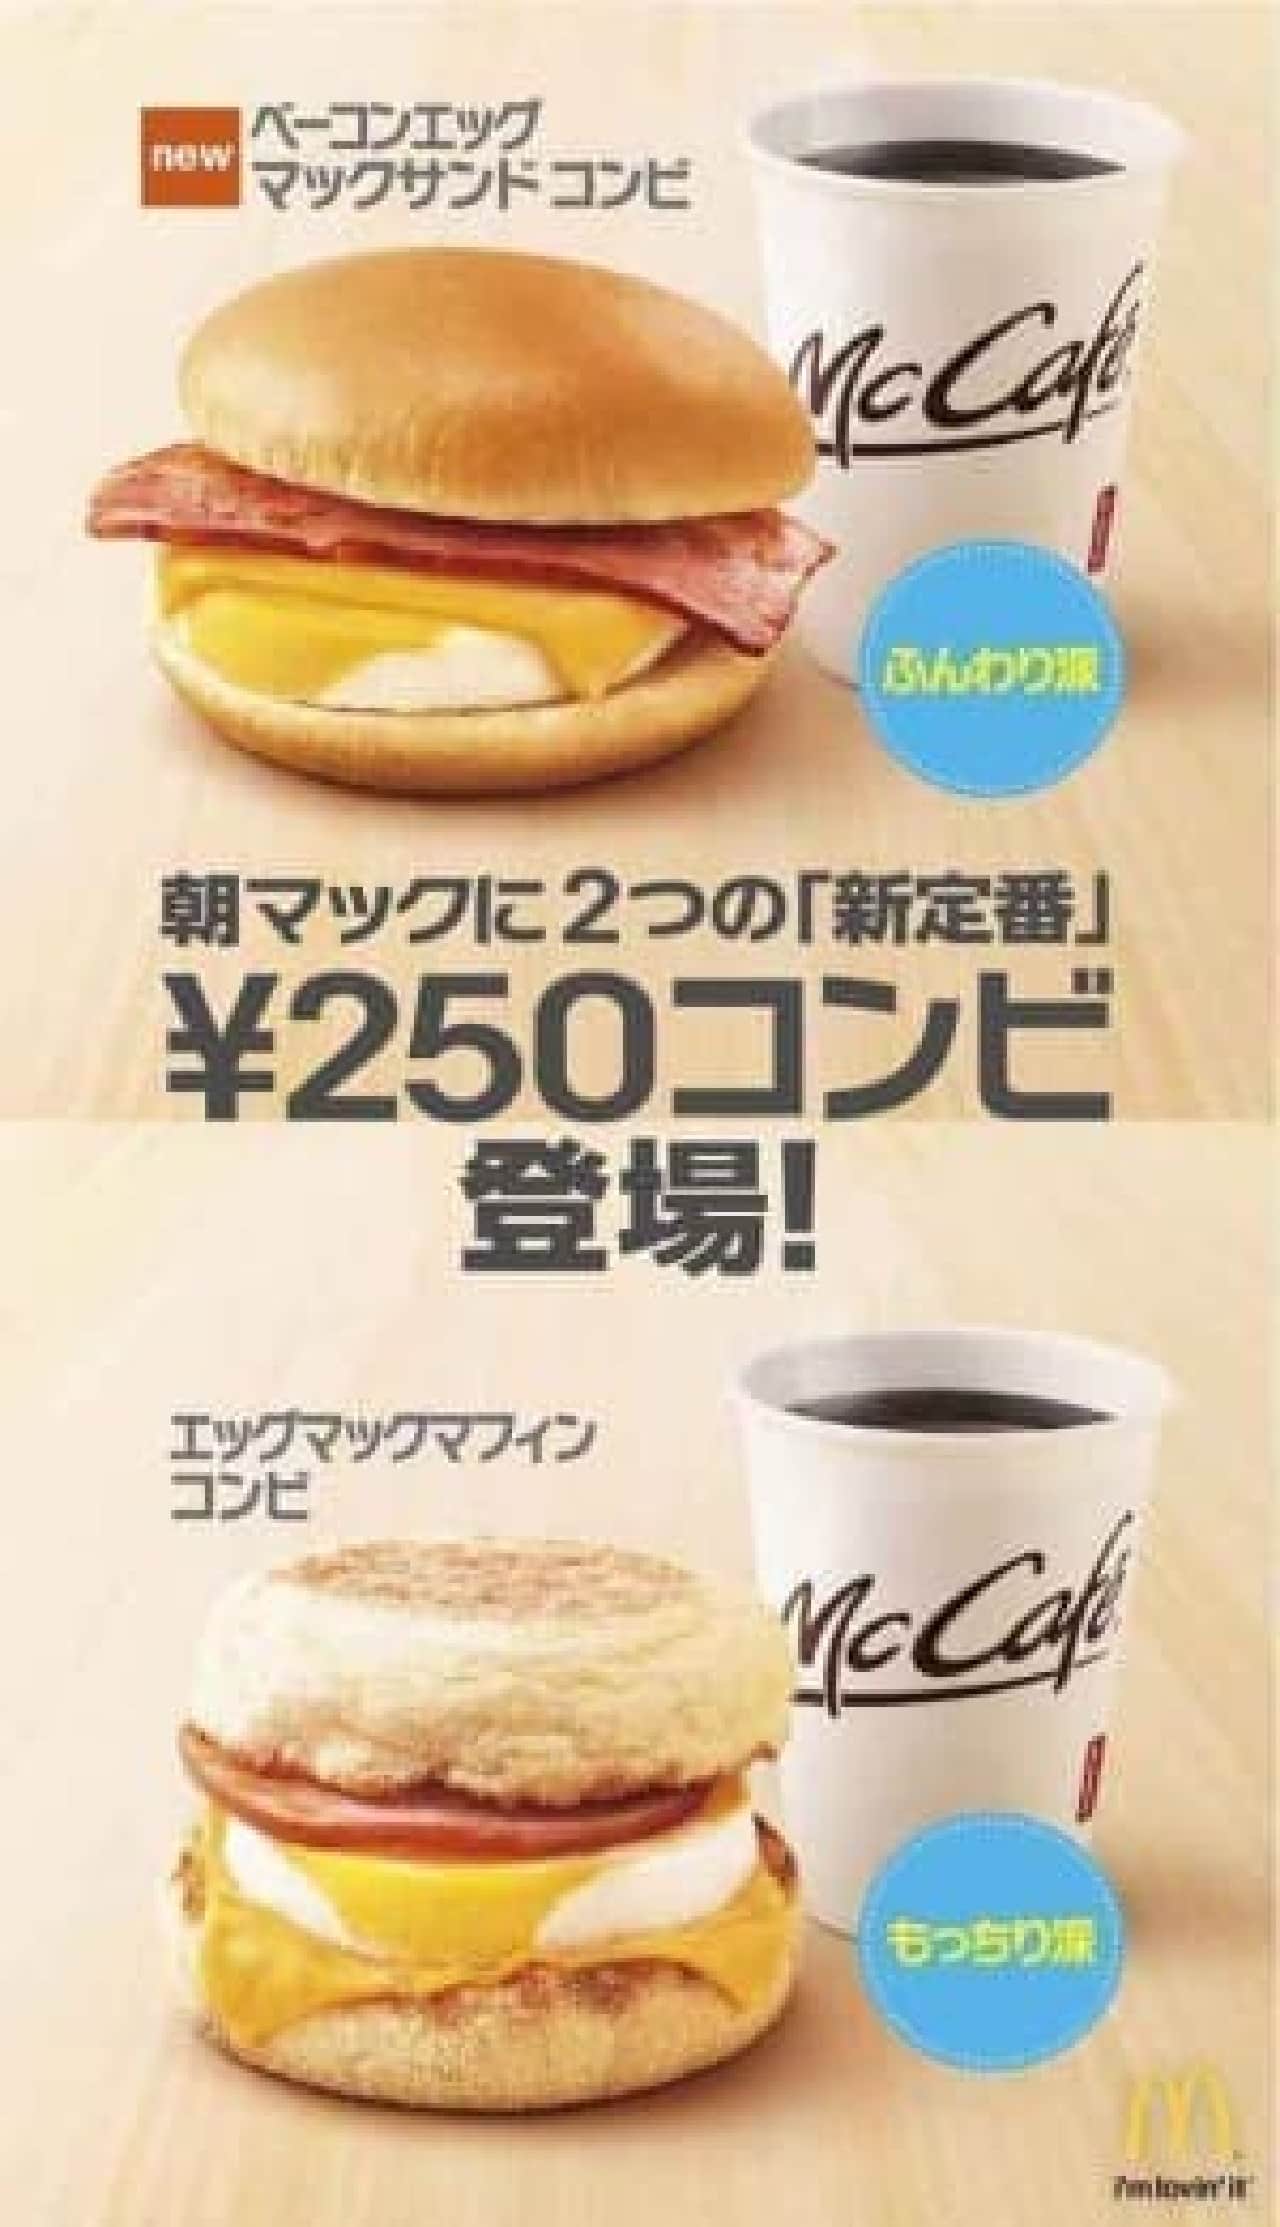 McDonald's "Morning Mac"